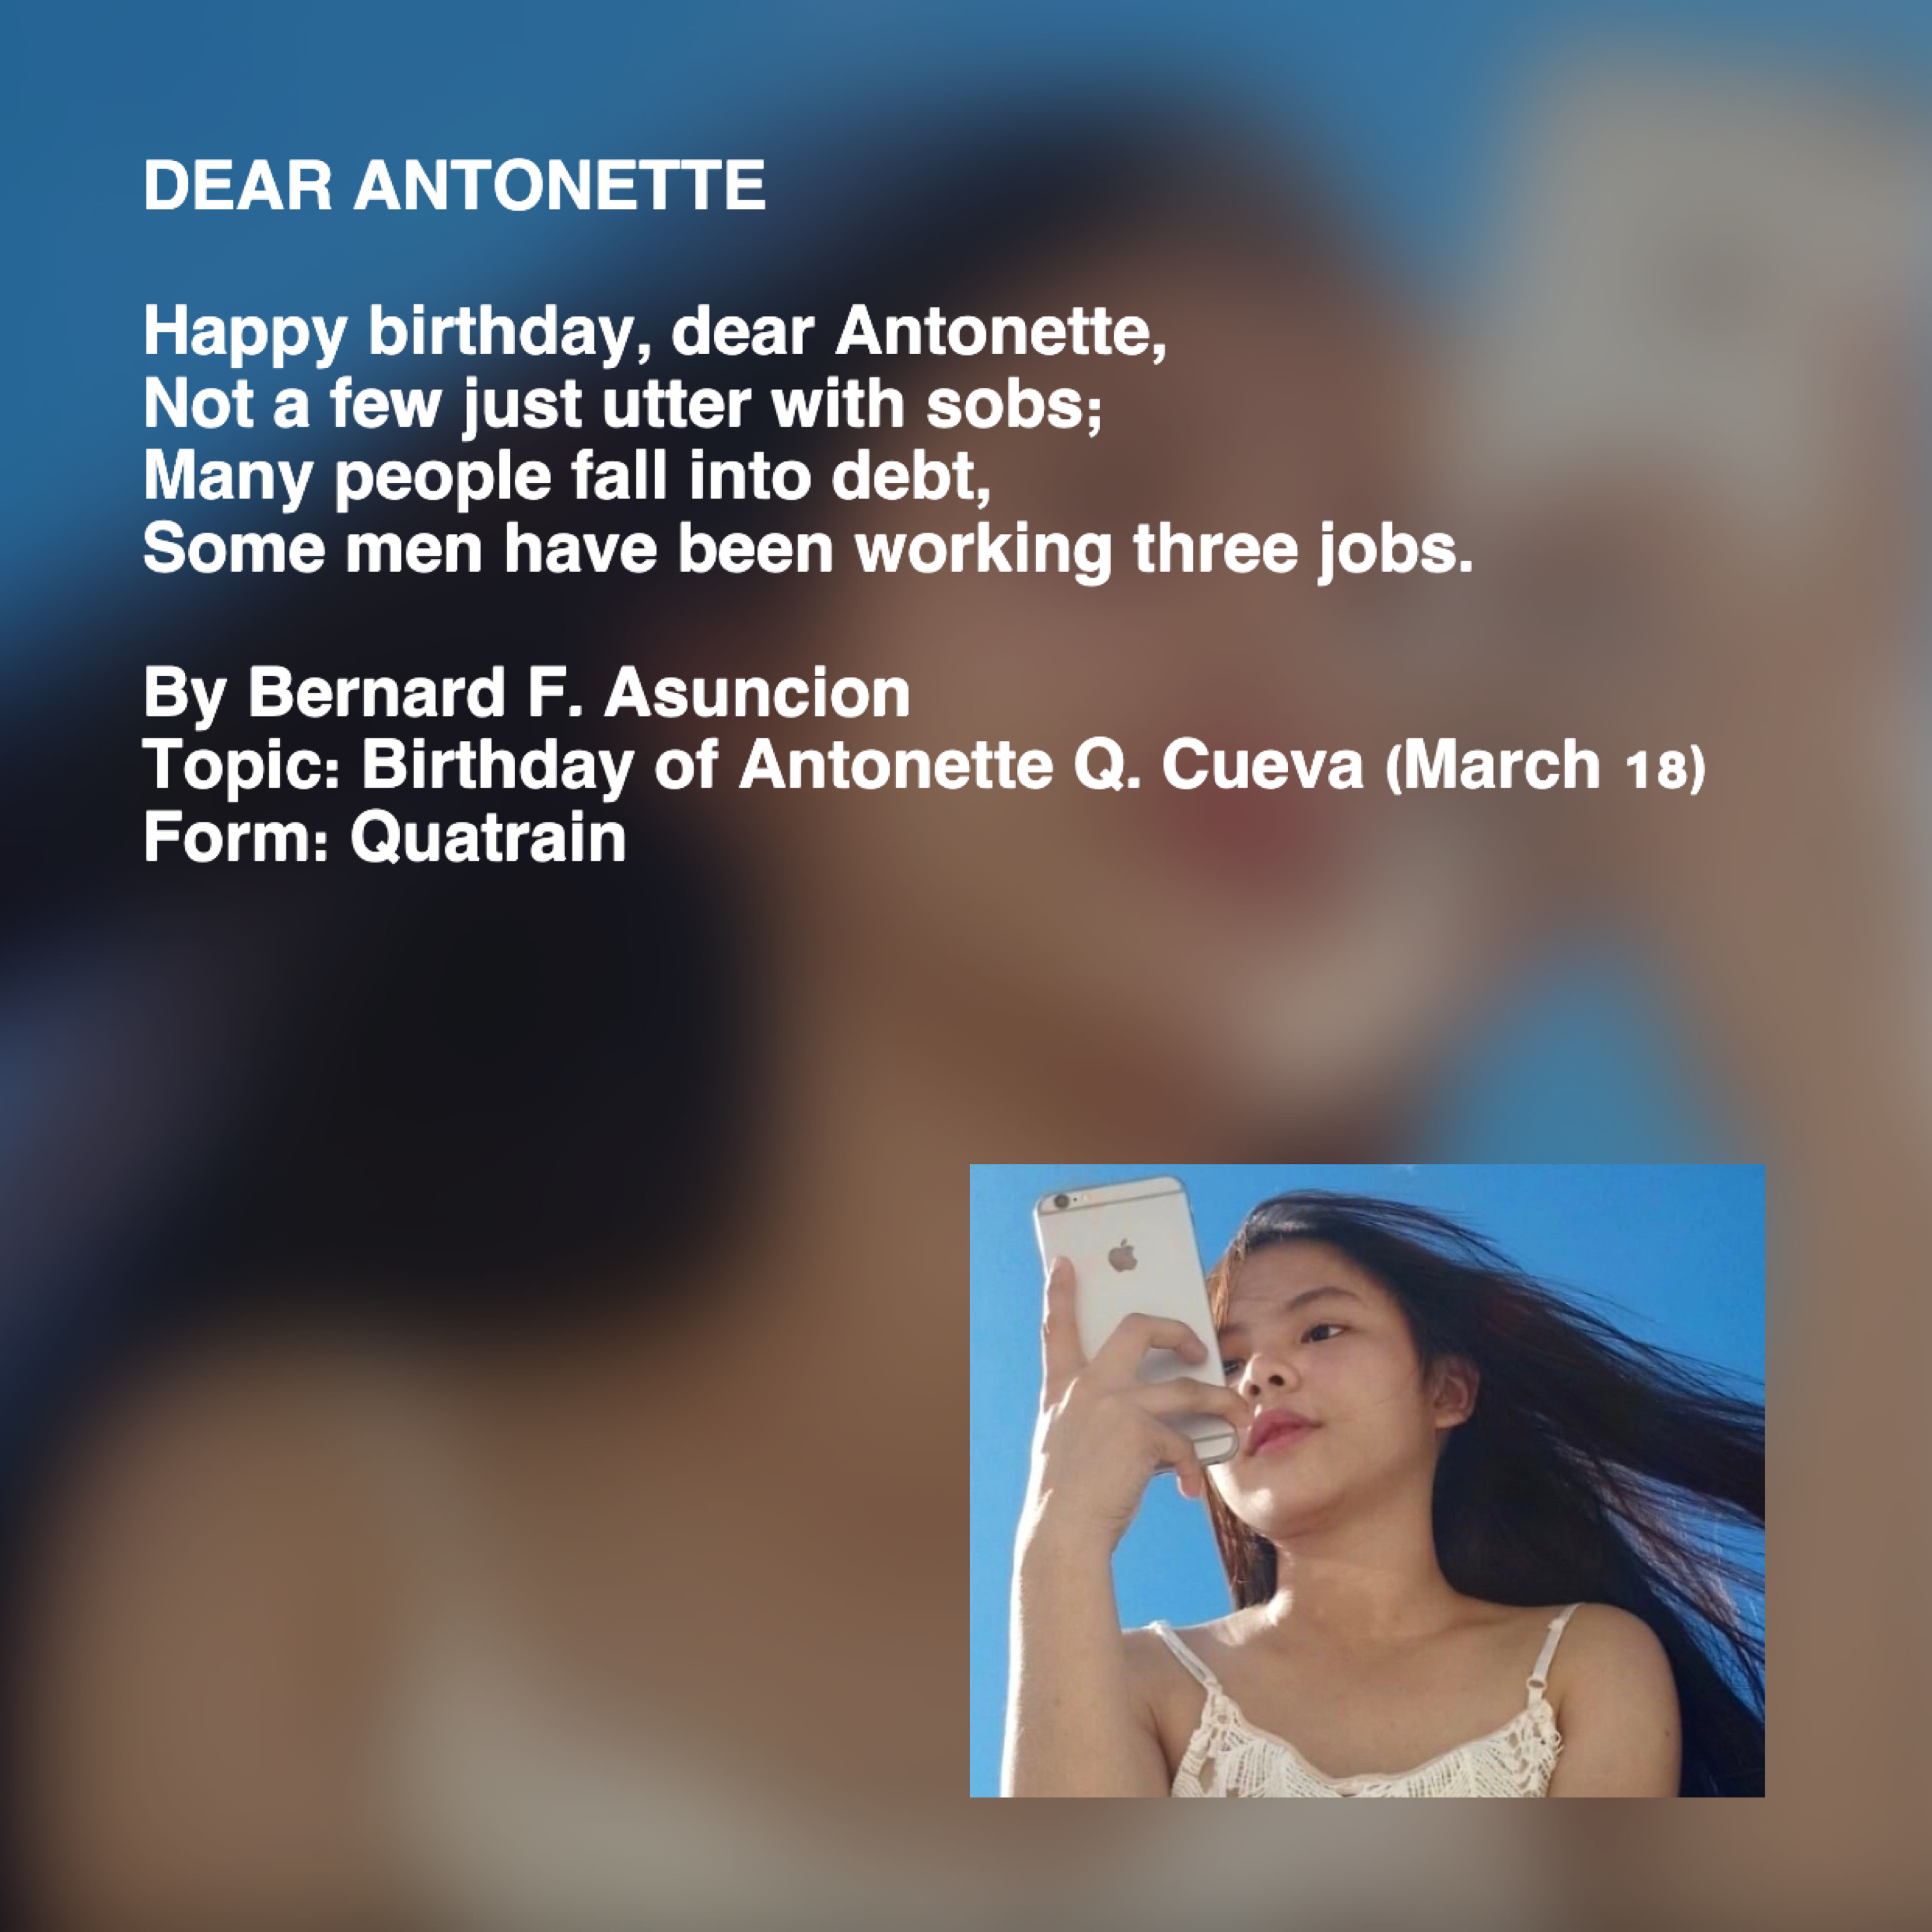 Dear Antonette